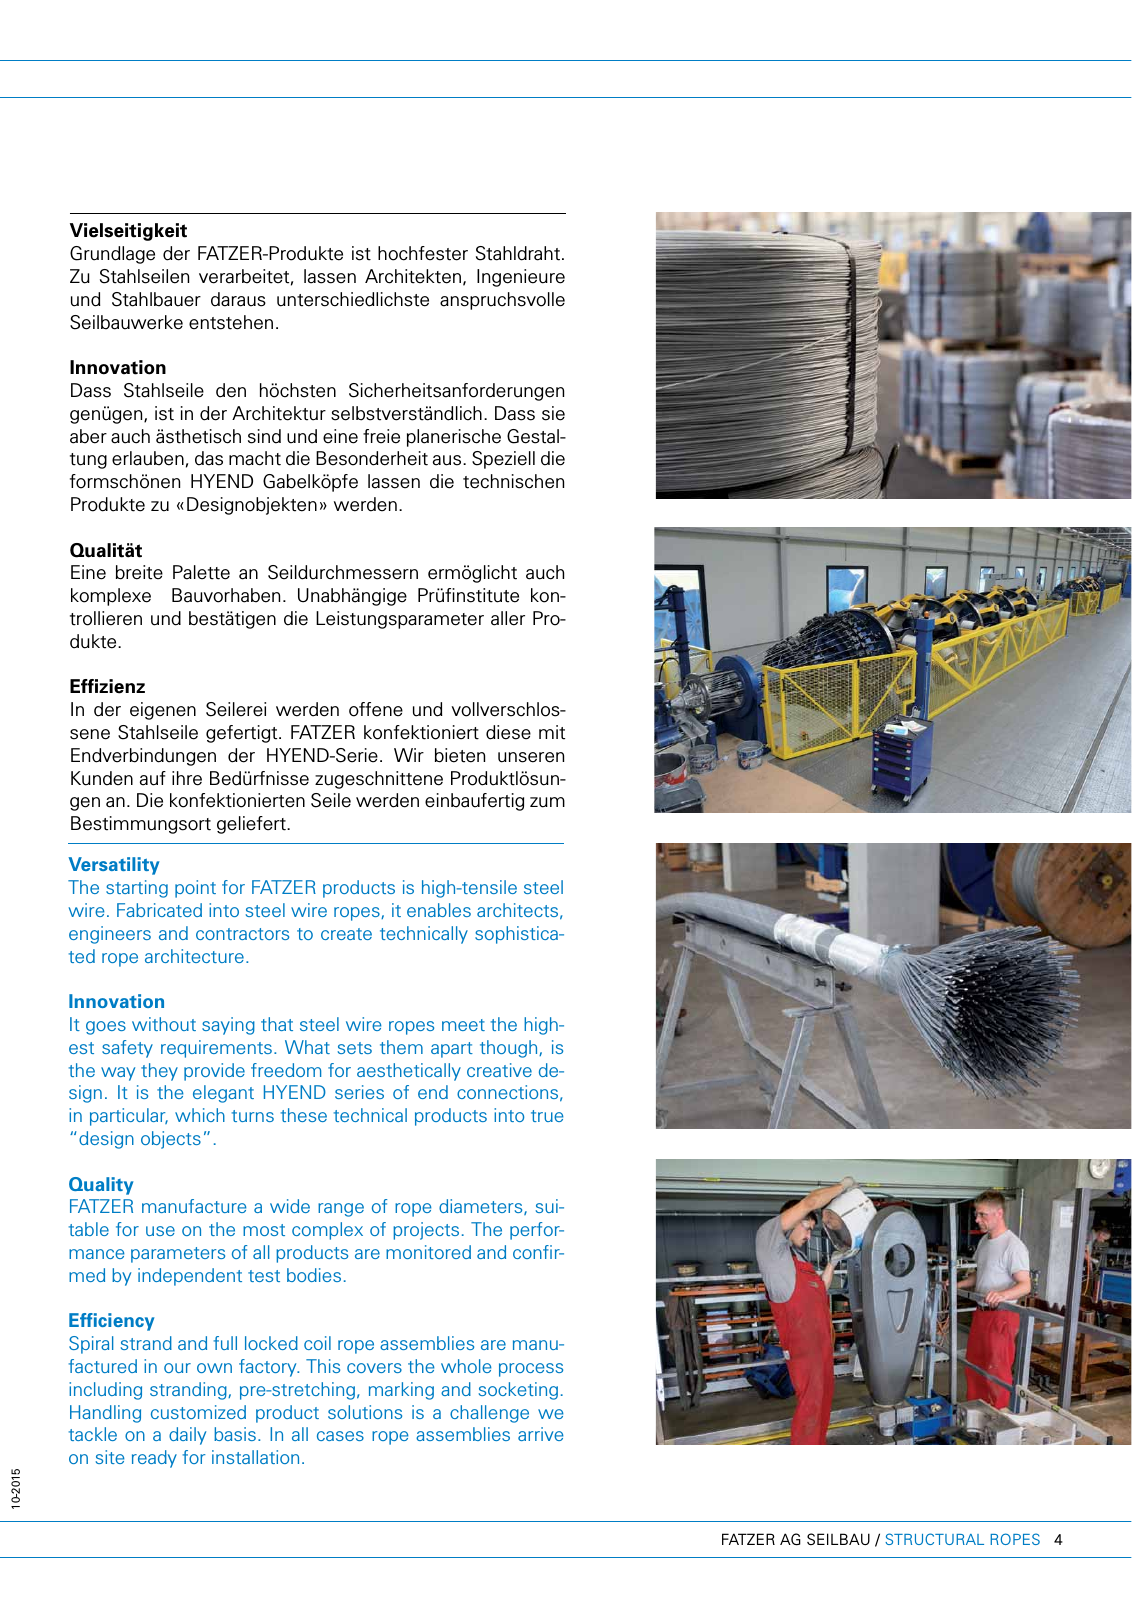 Vorschau FATZER Seilbau Structural Ropes Brochure Seite 5